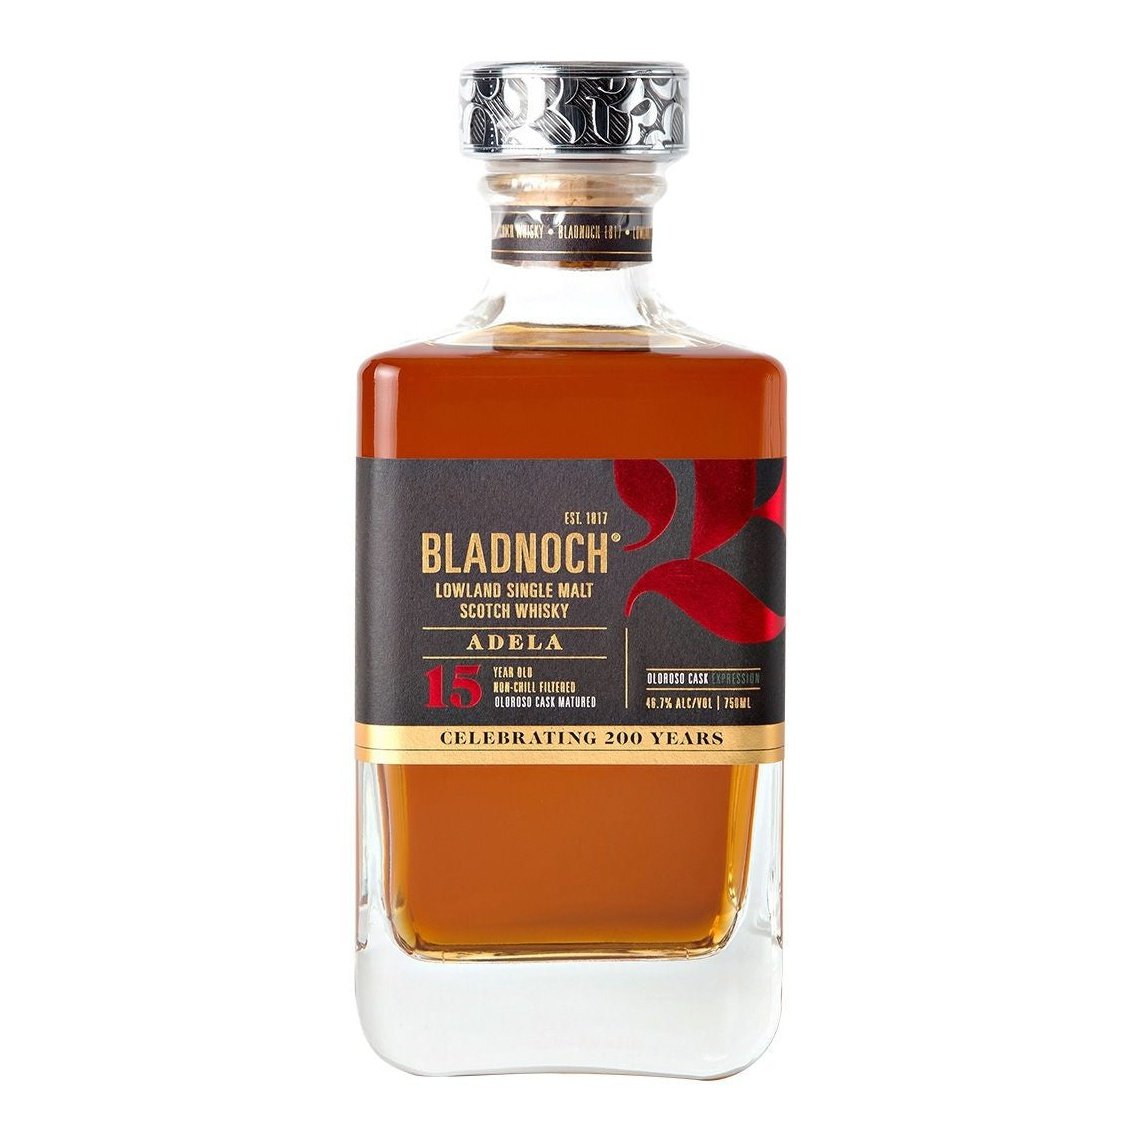 Bladnoch Adela Lowland Single Malt Scotch Whisky 15 Year Old 750ml